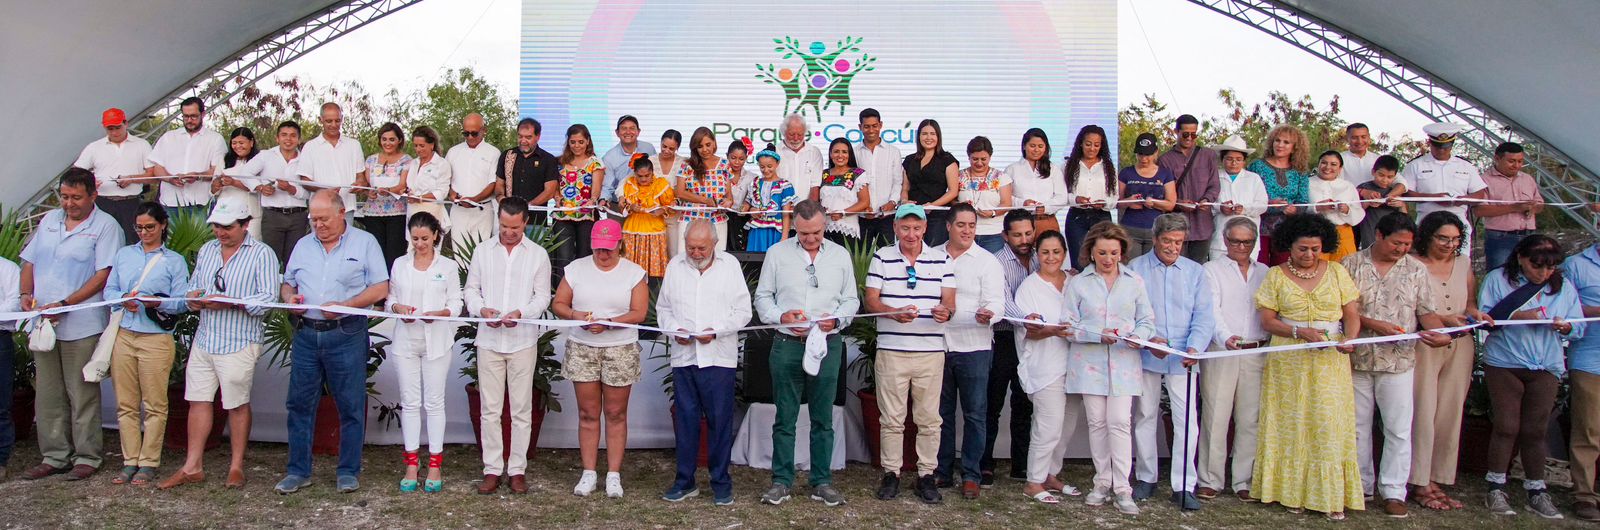 Mara Lezama inaugura la 1a etapa del Parque Cancún